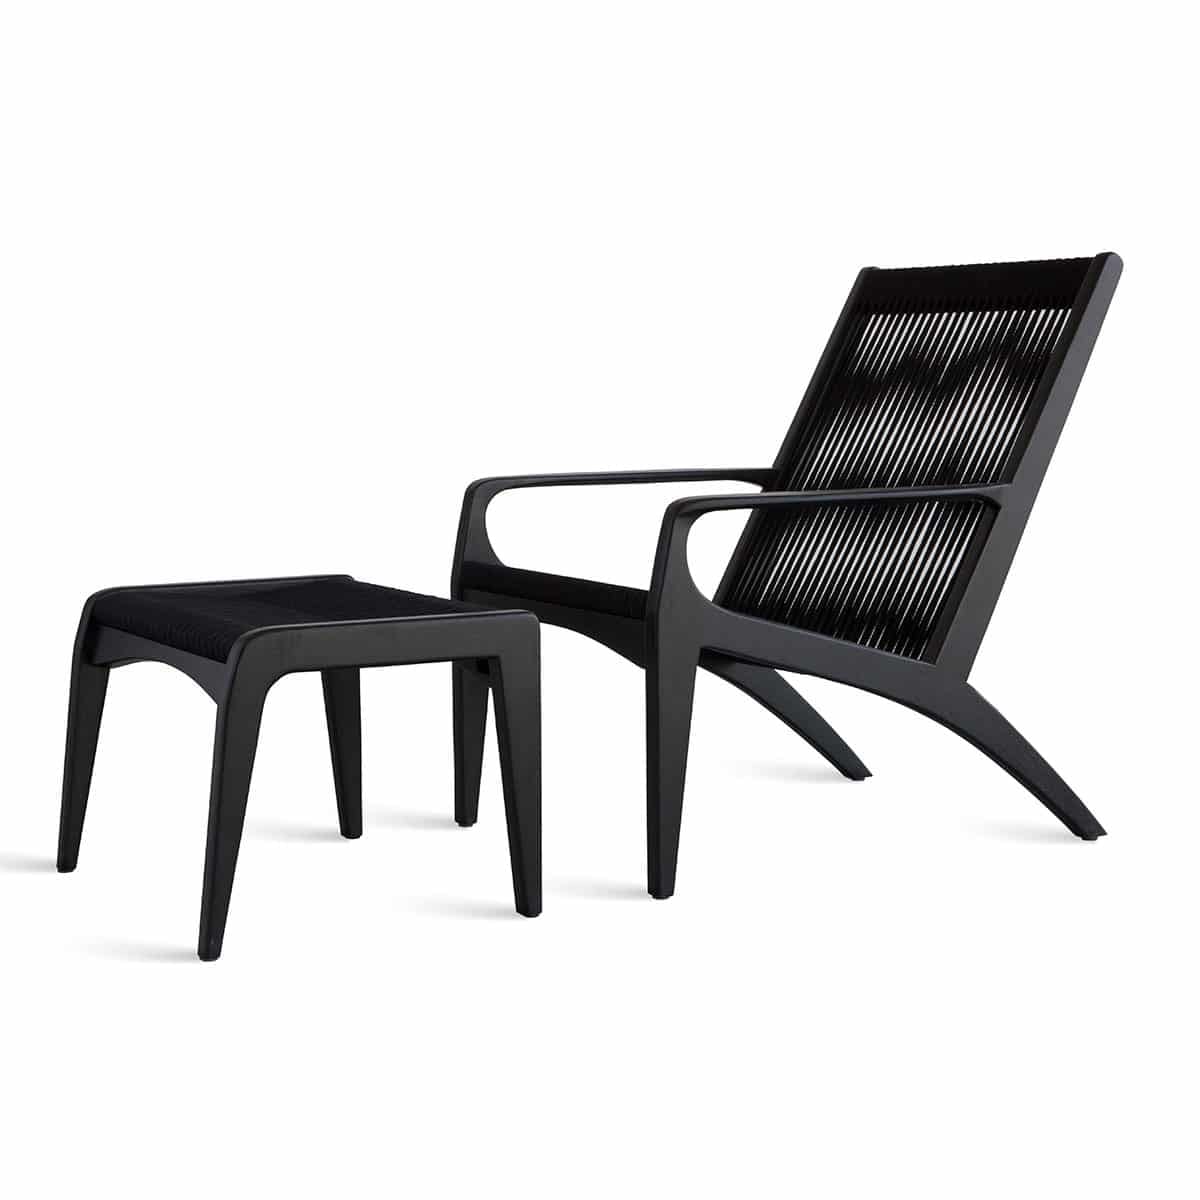 Designer Aristeu Pires Design Pitu Chaise Lounge Chair and Pitu Ottoman